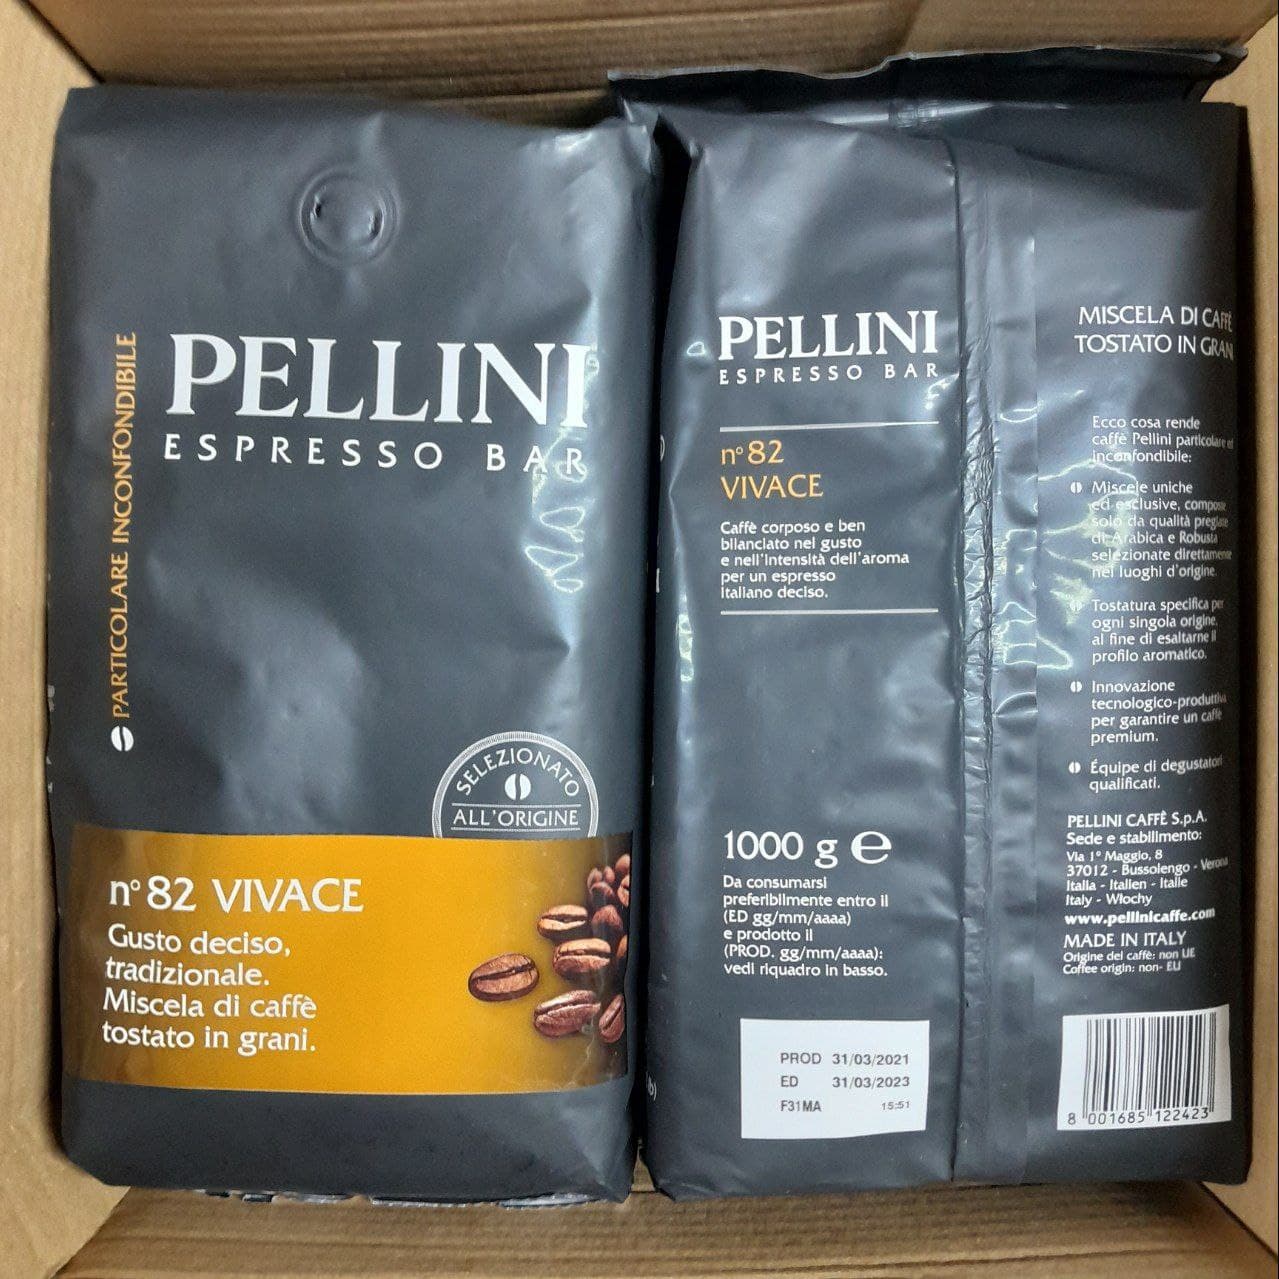 Pupiņu kafija "PELLINI" Espresso Bar Vivace